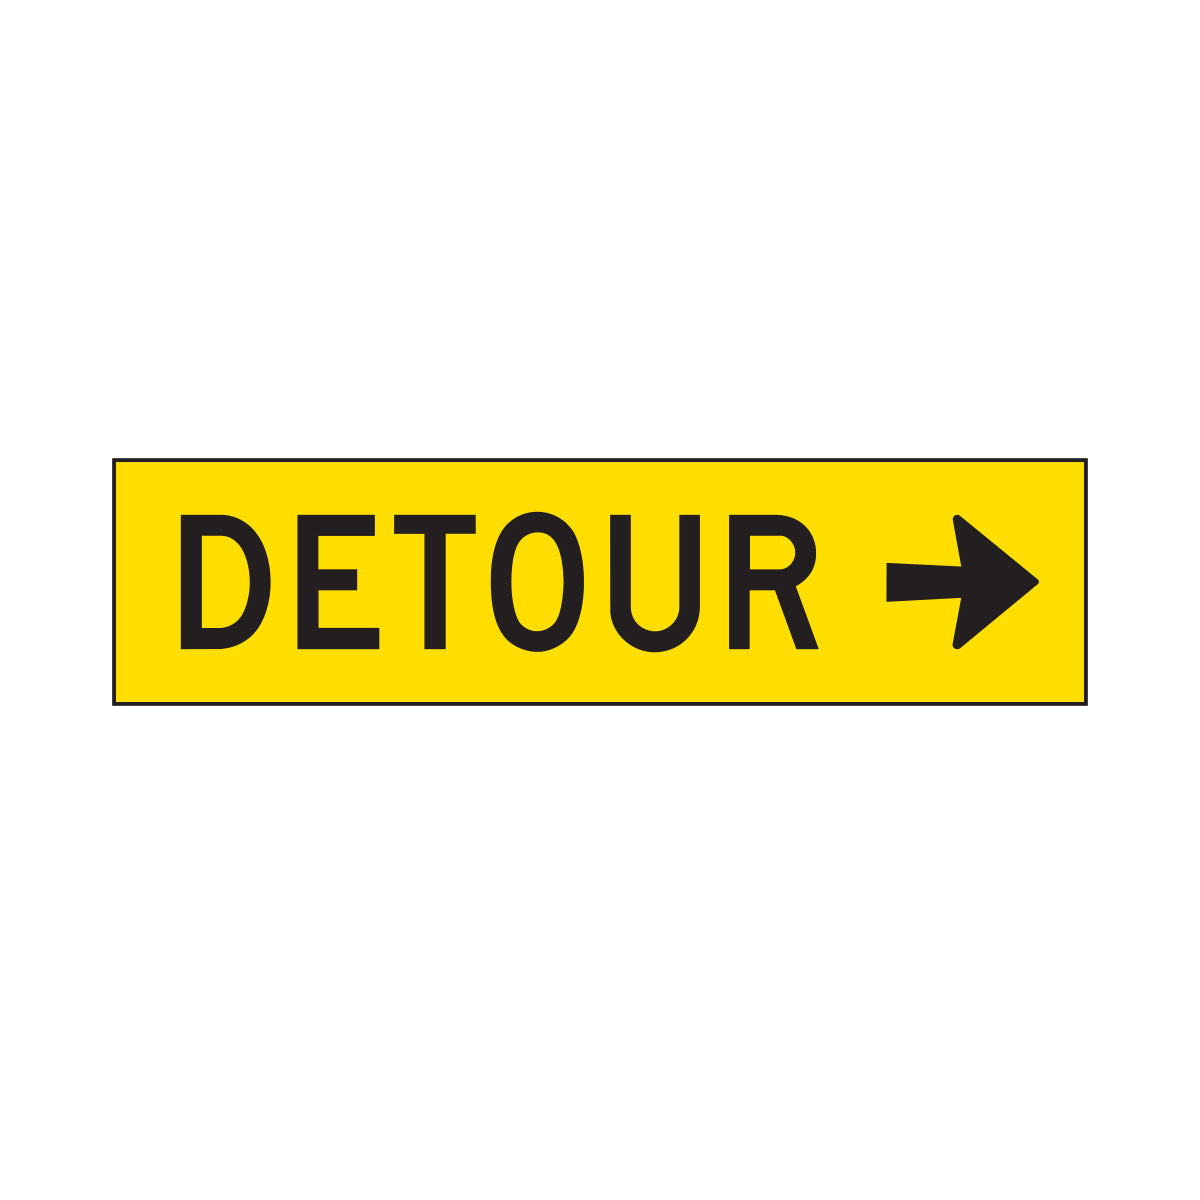 Detour Sign - Right